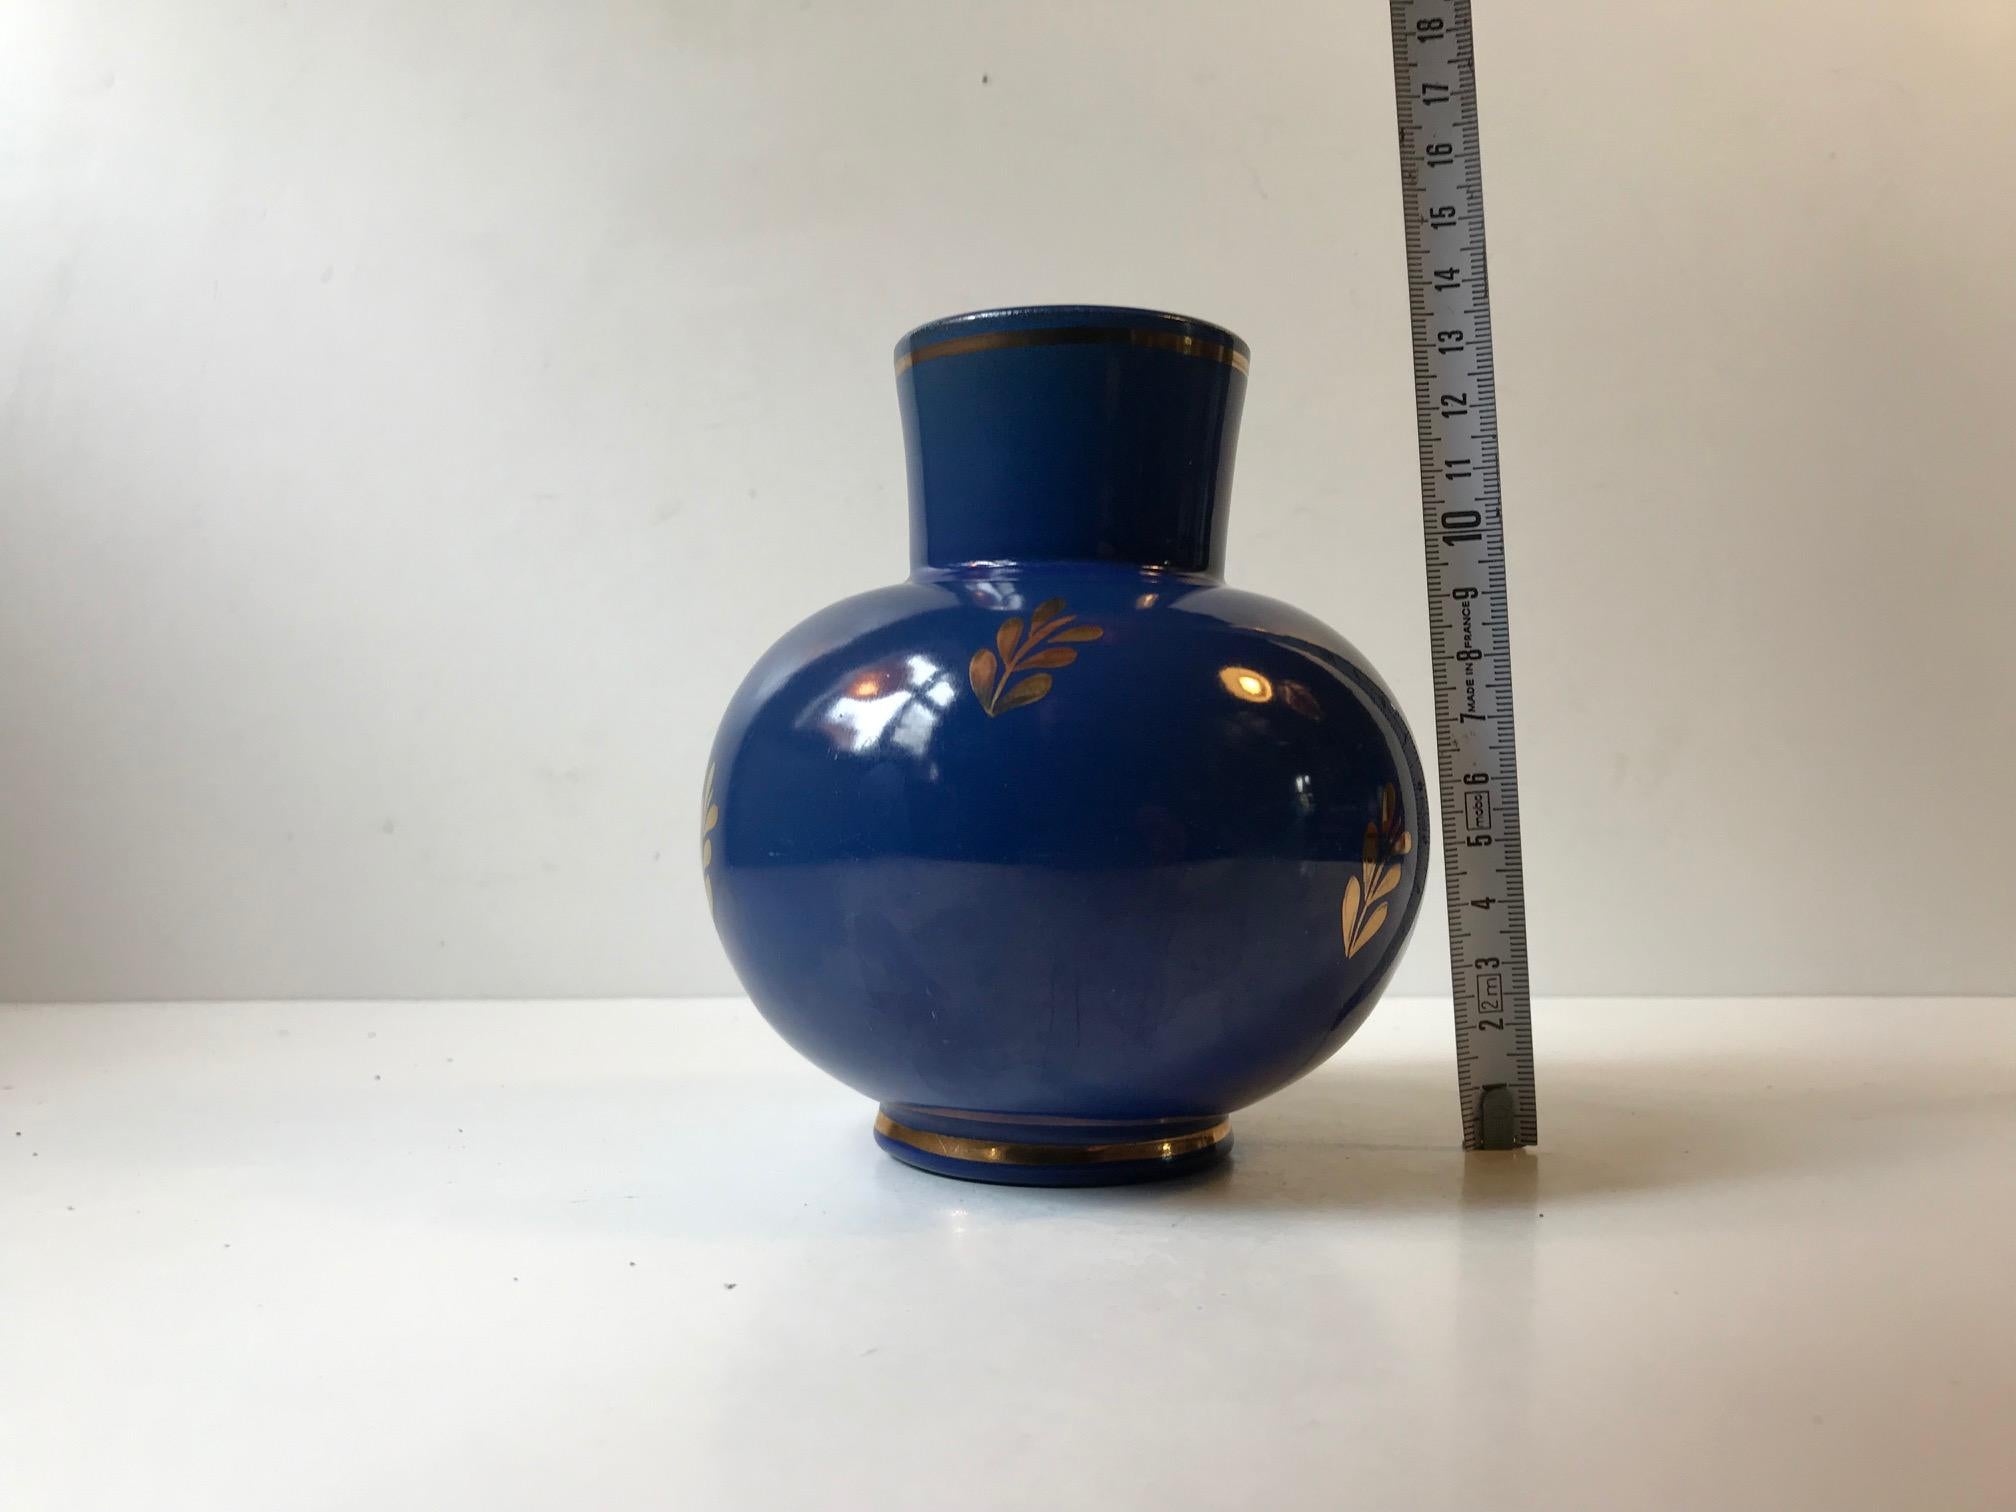 Scandinavian Modern Scandinavian Blue Pottery Vase with Gold Foliage by Jerk Werkmaster for Nittsjö